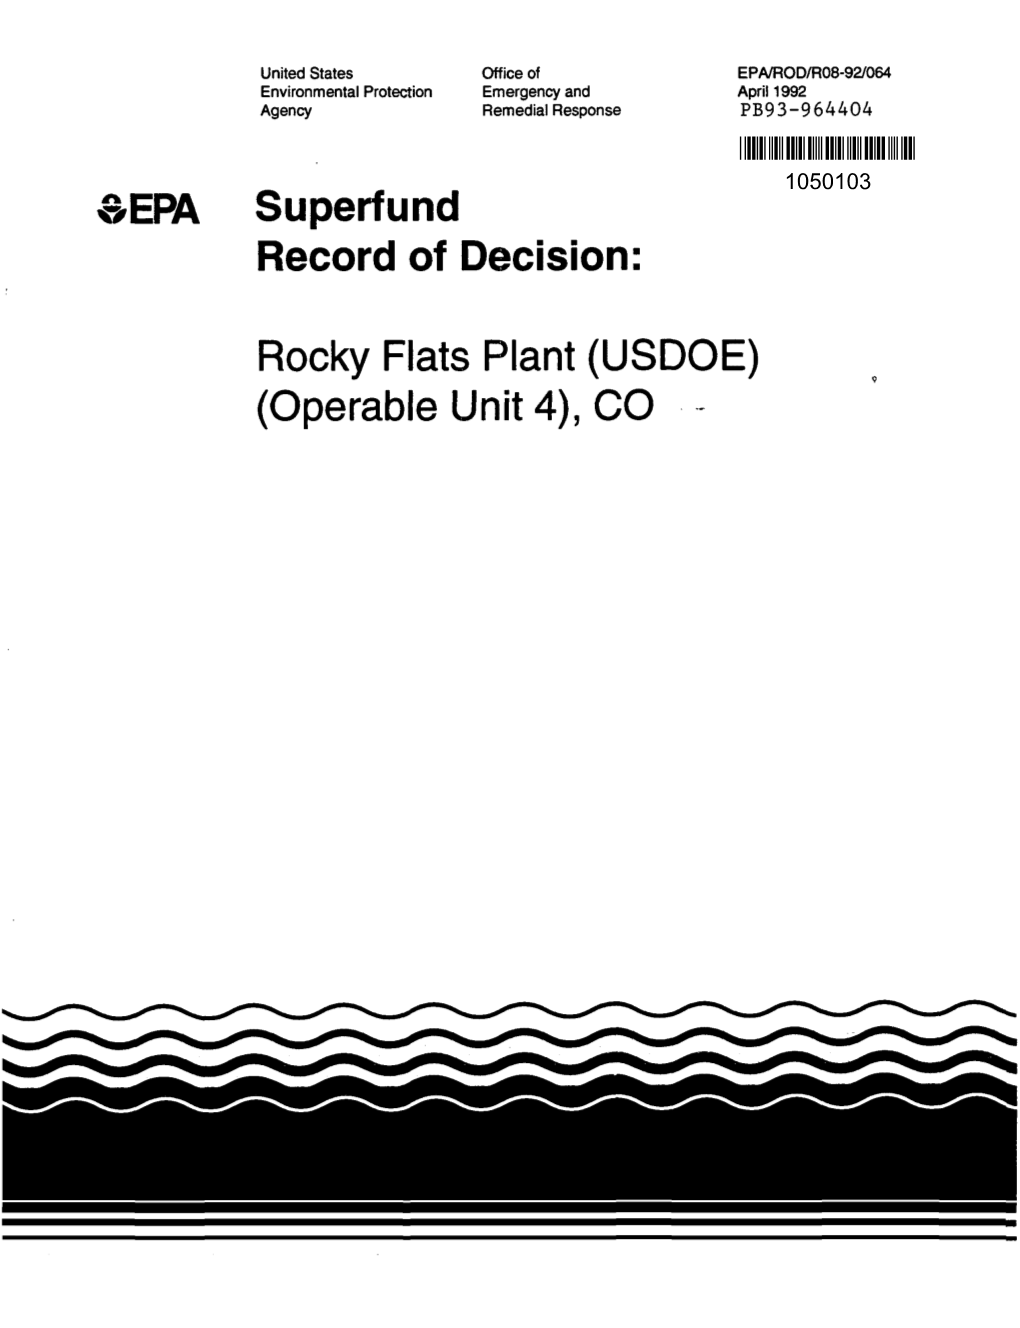 Rocky Flats Plant (USDOE) (Operable Unit 4), CO NOTICE